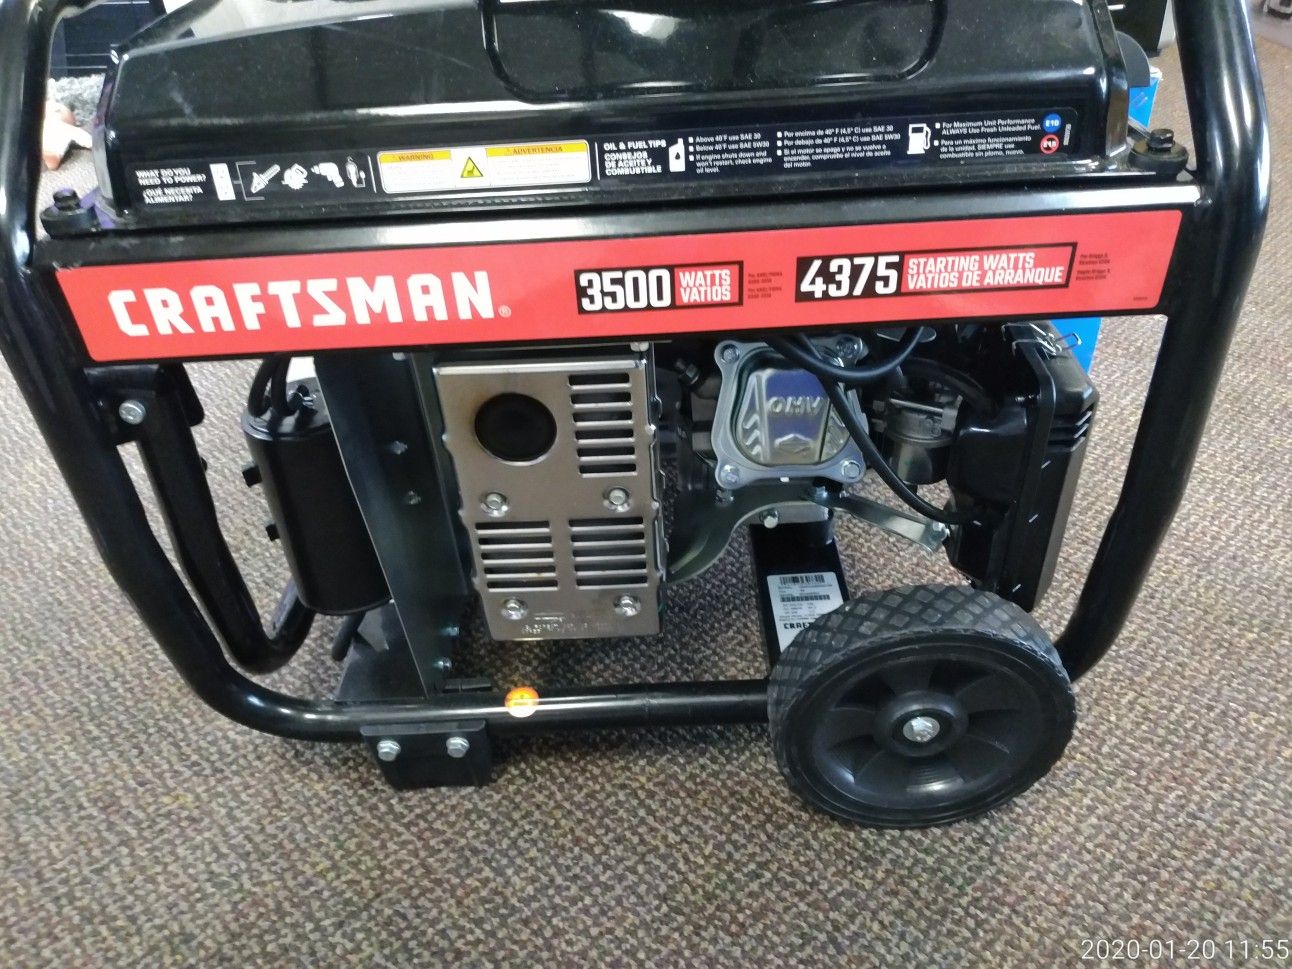 Craftsman 3500 watt generator